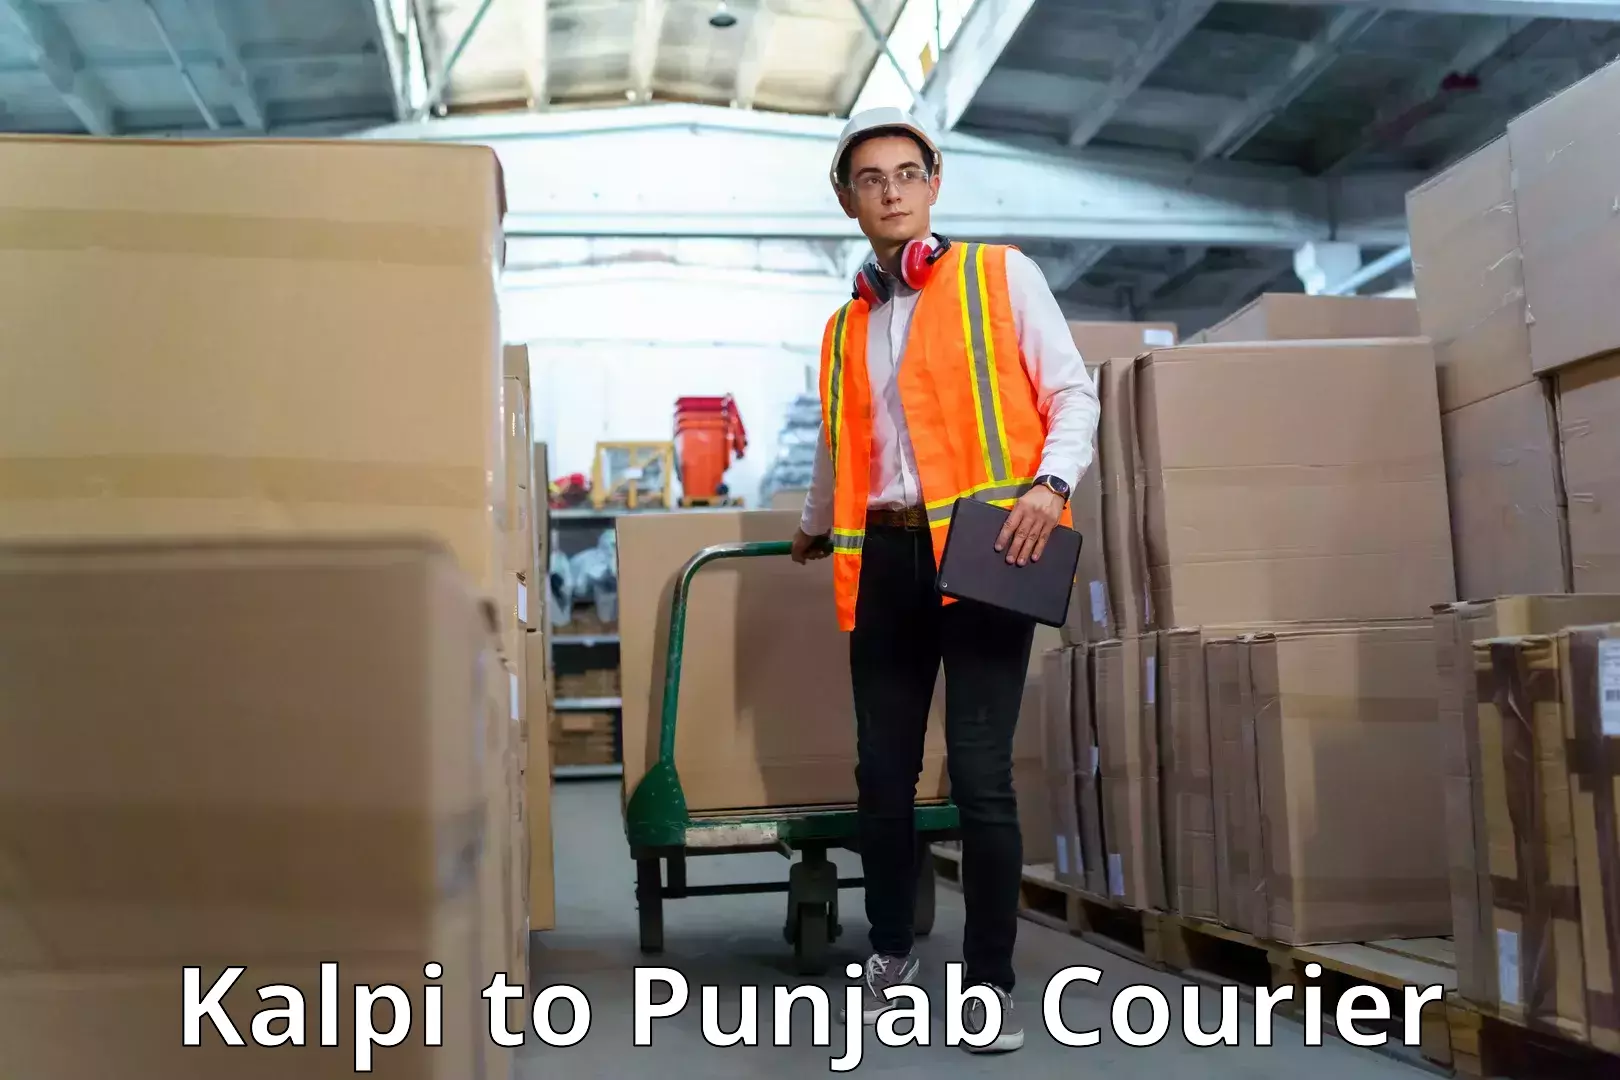 Courier service efficiency Kalpi to Punjab